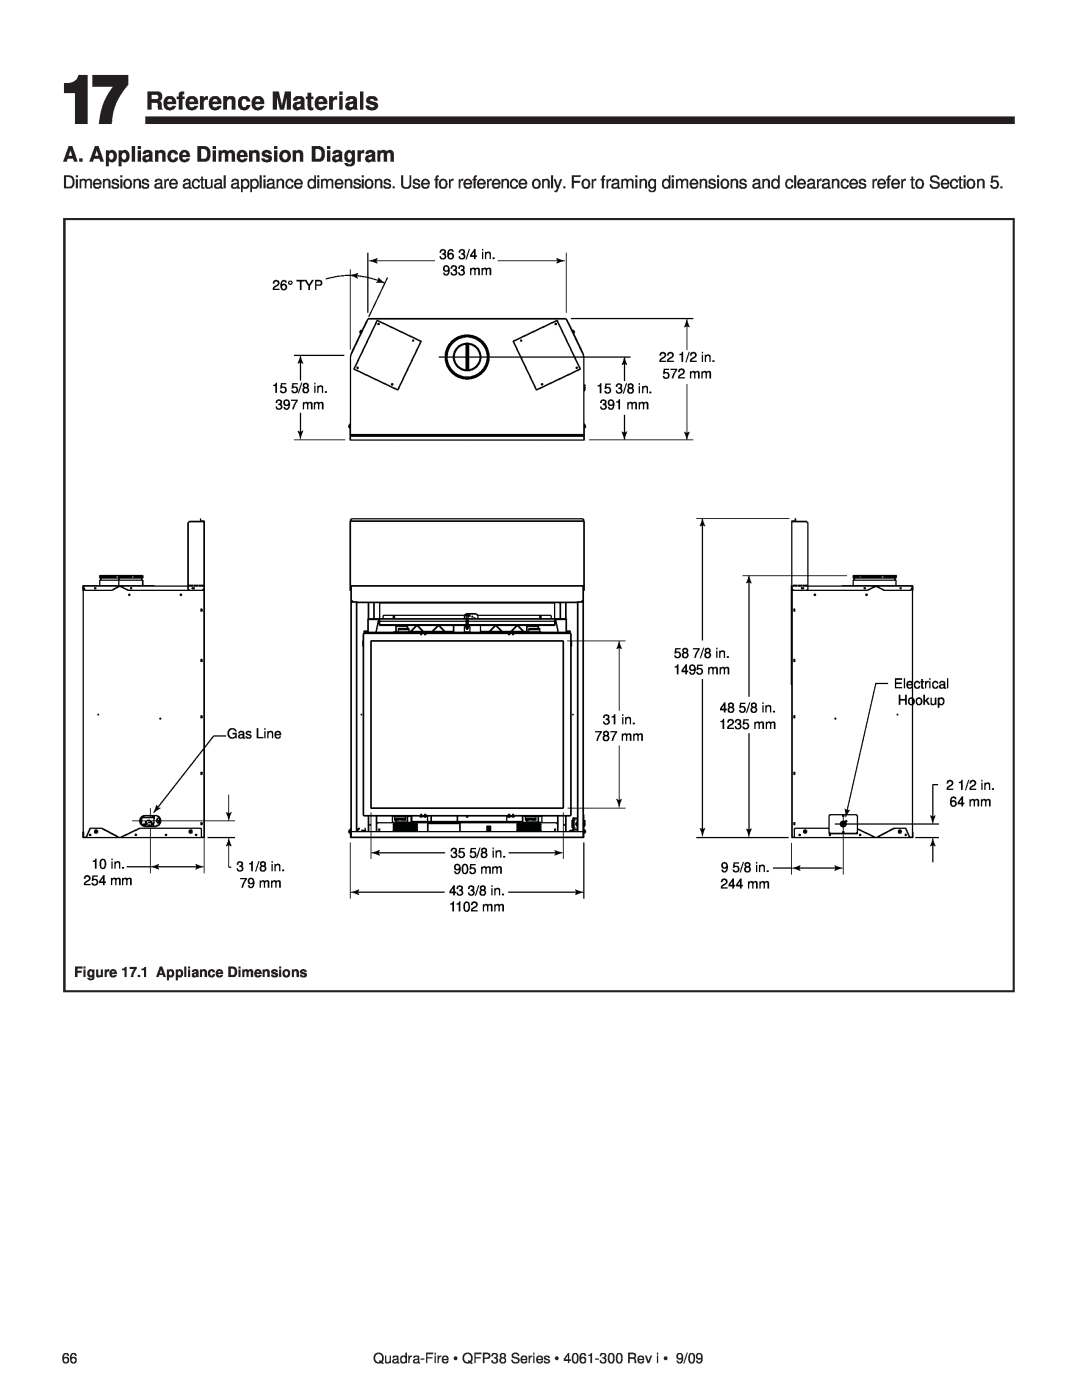 Quadra-Fire QFP38-NG Reference Materials, A. Appliance Dimension Diagram, Quadra-Fire QFP38 Series 4061-300 Rev i 9/09 